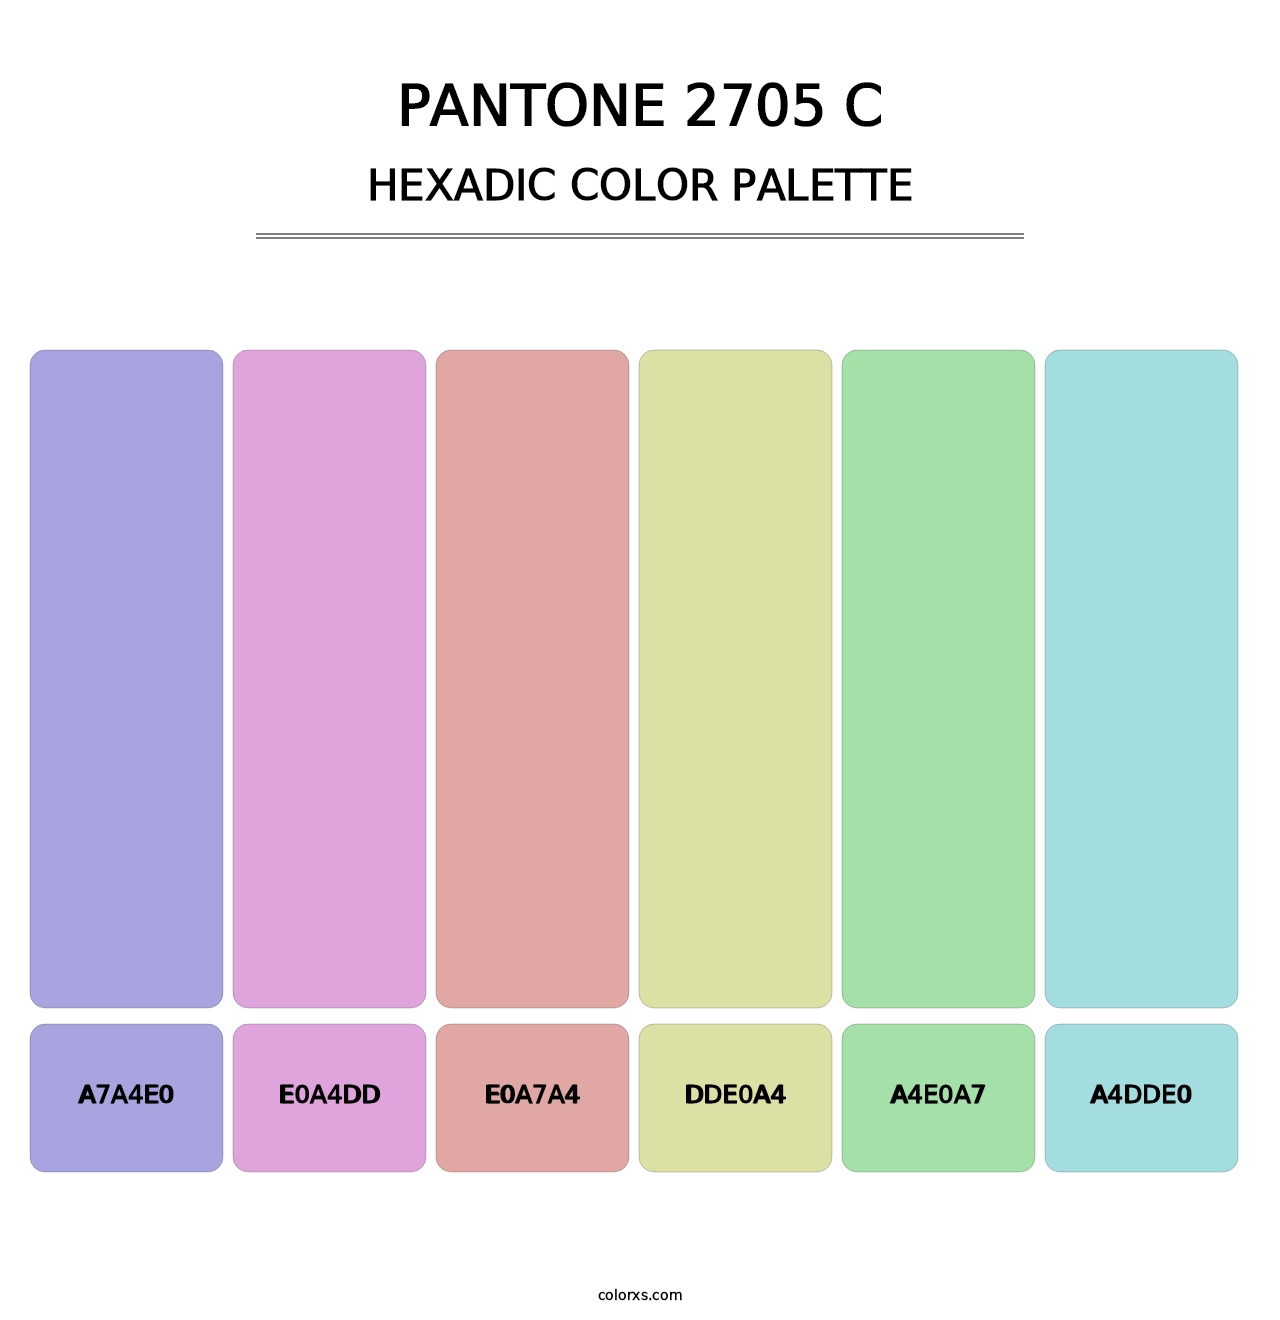 PANTONE 2705 C - Hexadic Color Palette